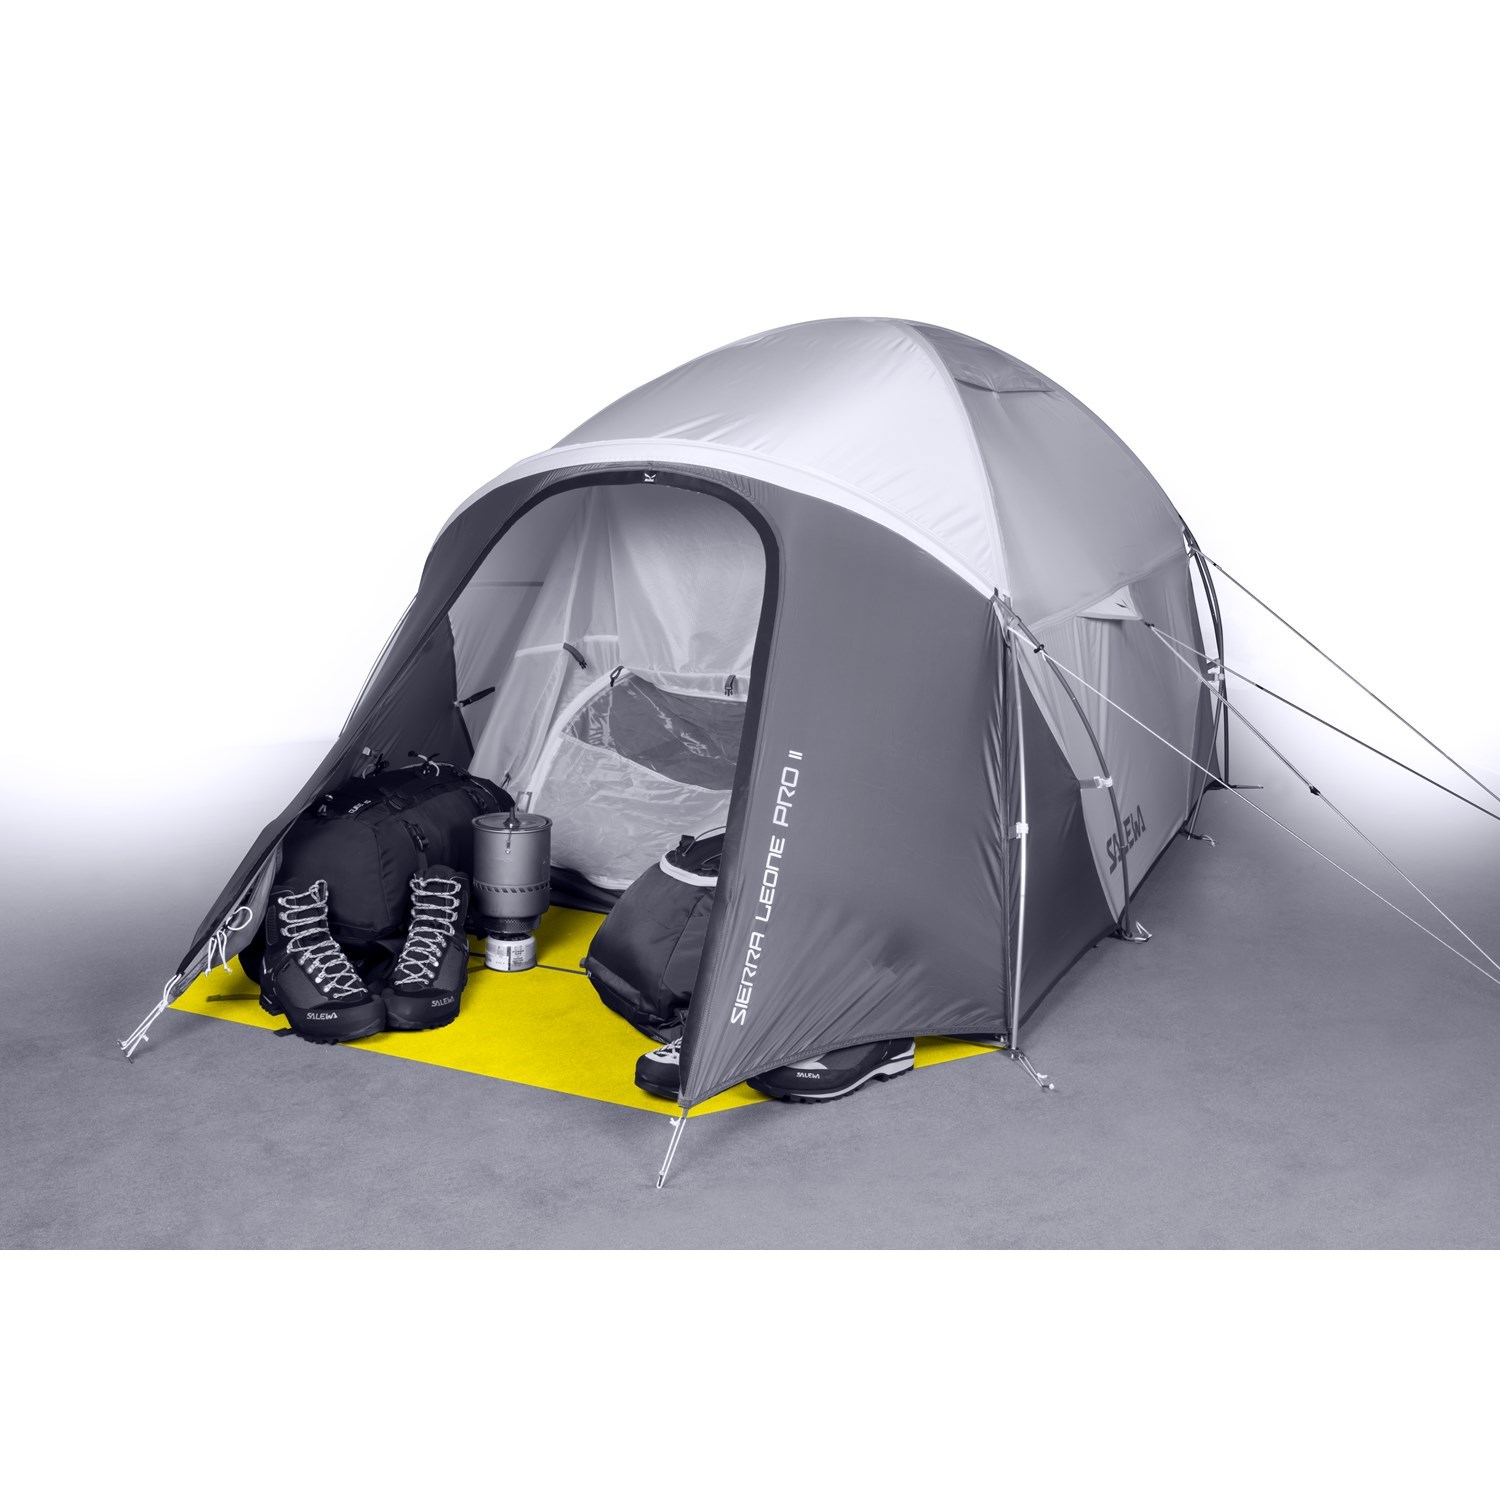 Salewa - Salewa Litetrek 3 tent - Engineer of outdoor Tent compare